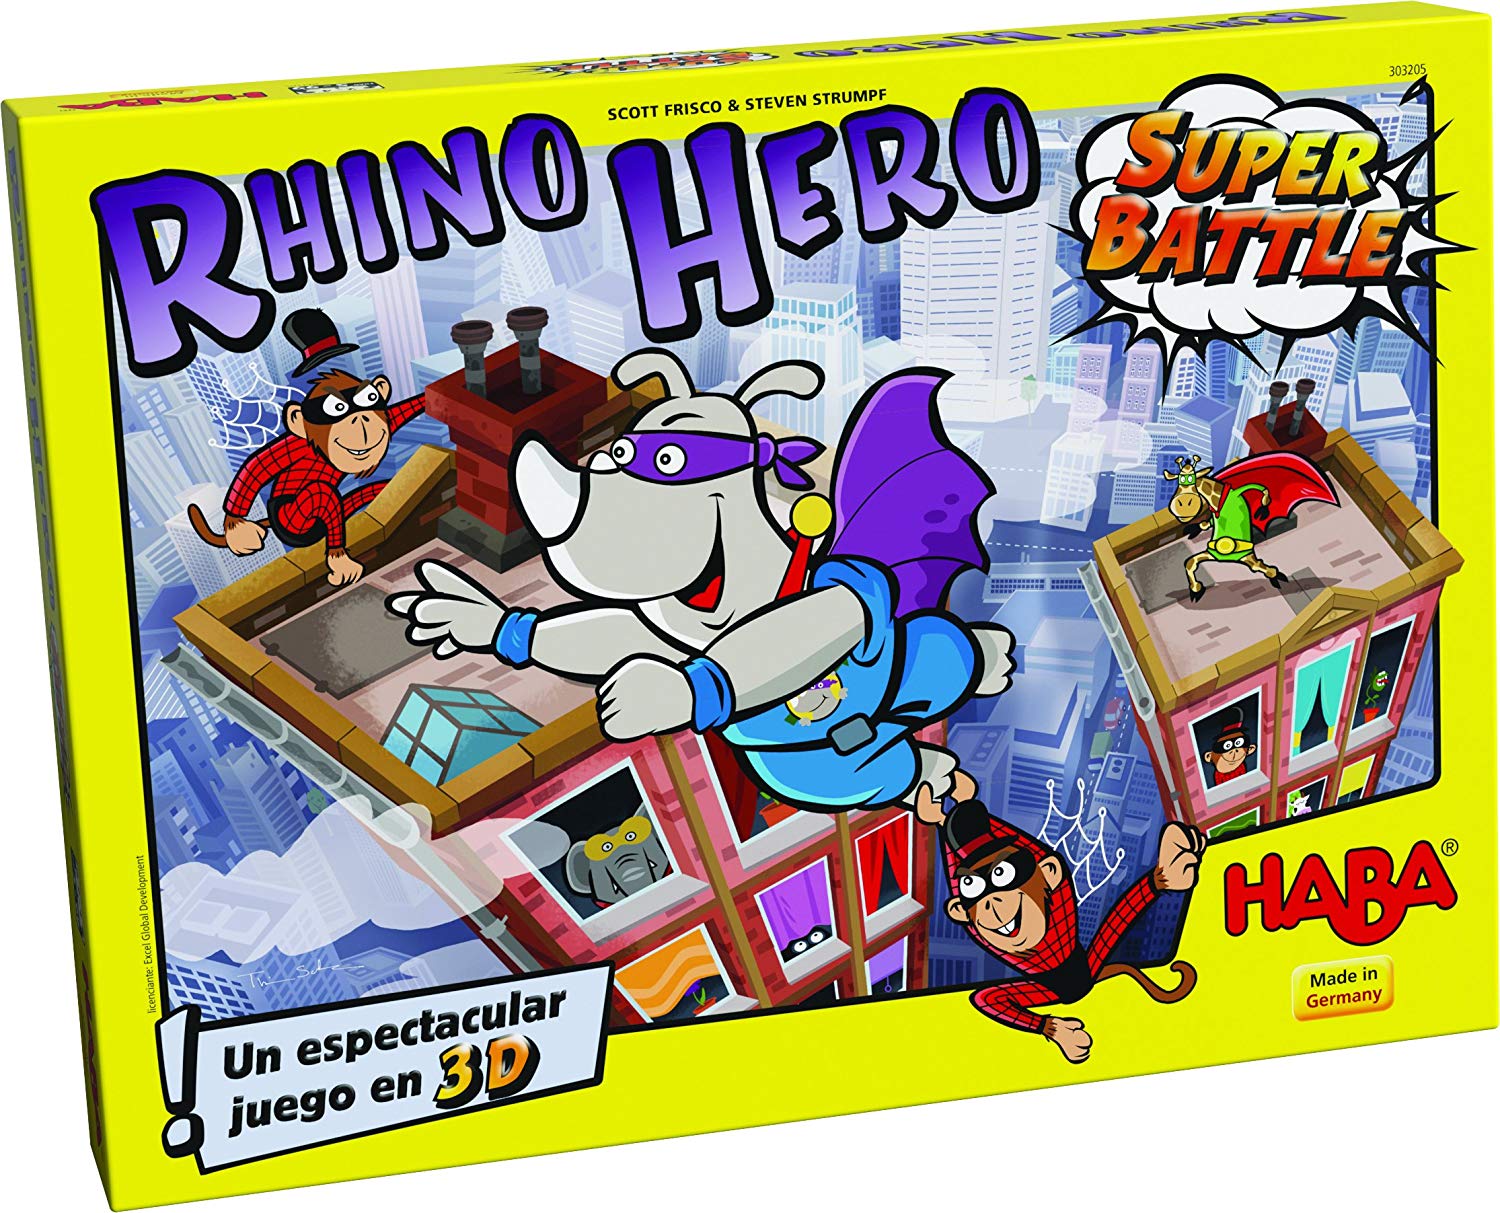 Haba Rhino Hero Super Battle Cat 304087 Multi-Coloured